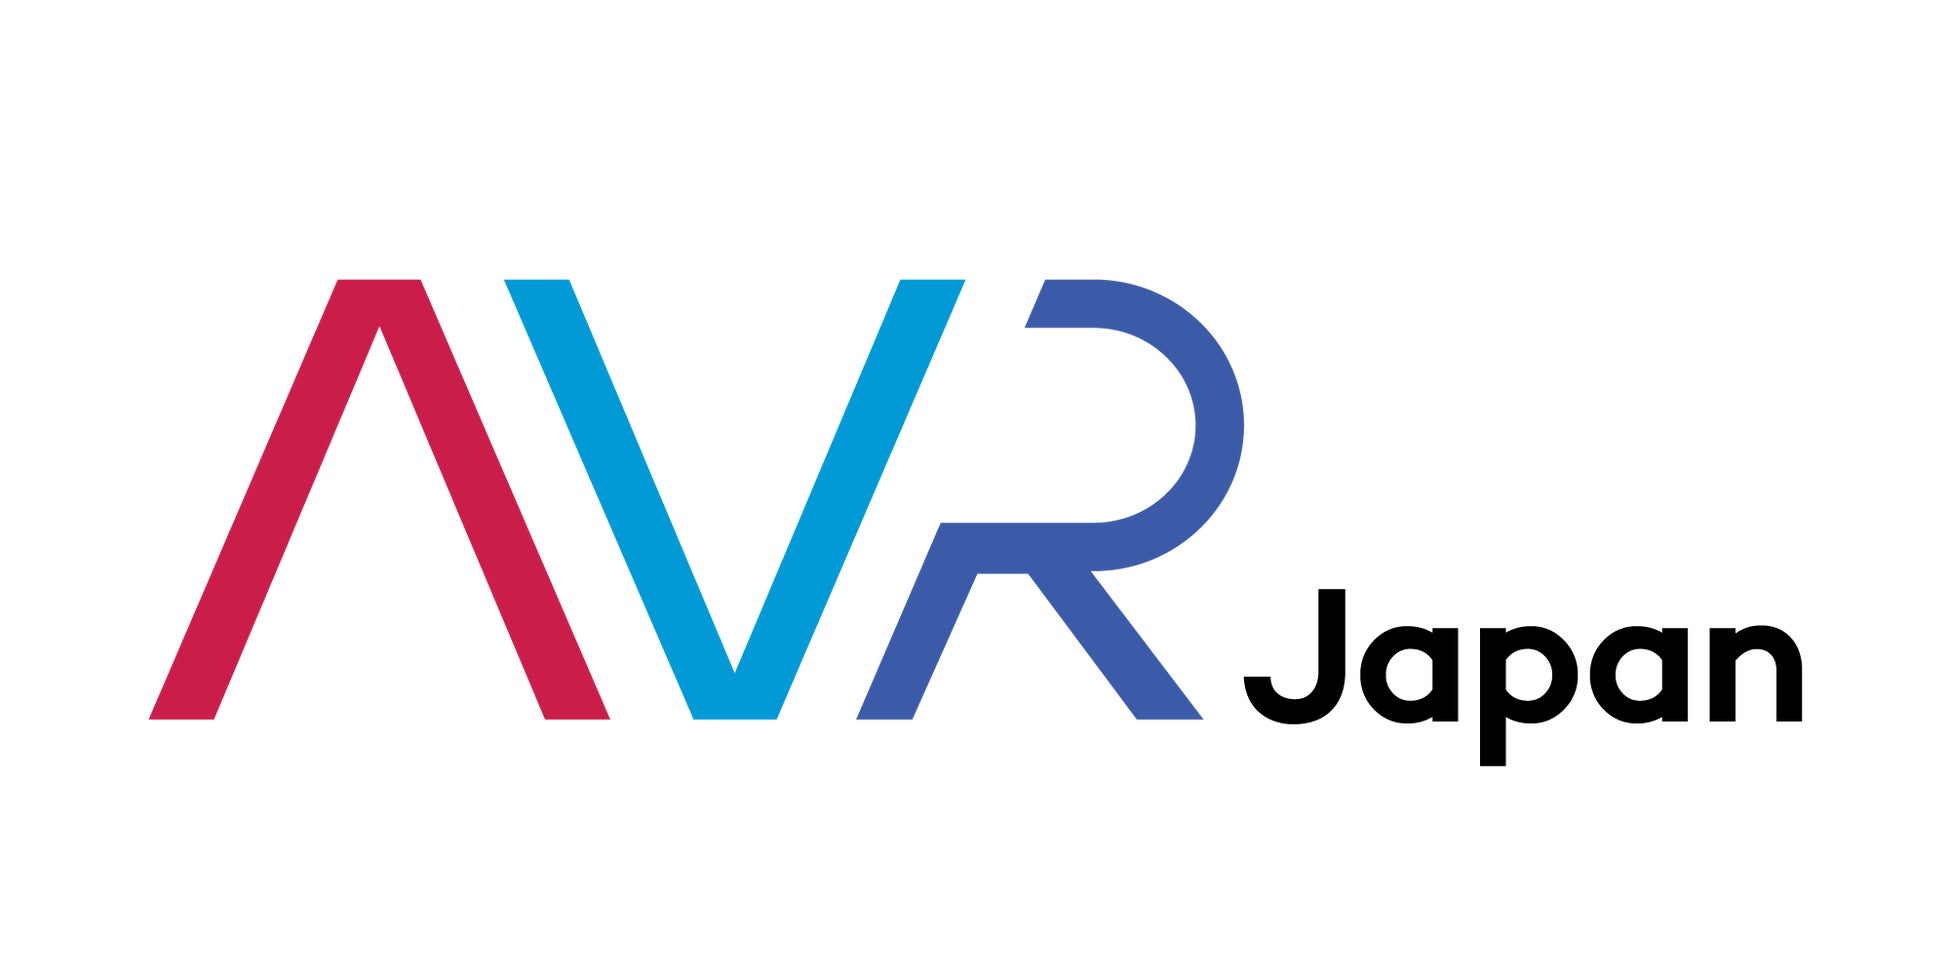 AVR Japan株式会社と、ものまねタレントコロッケが役員を務める株式会社アクアの共同制作による「五木ロボット工場」のバーチャルプロダクション動画を公開！のサブ画像7